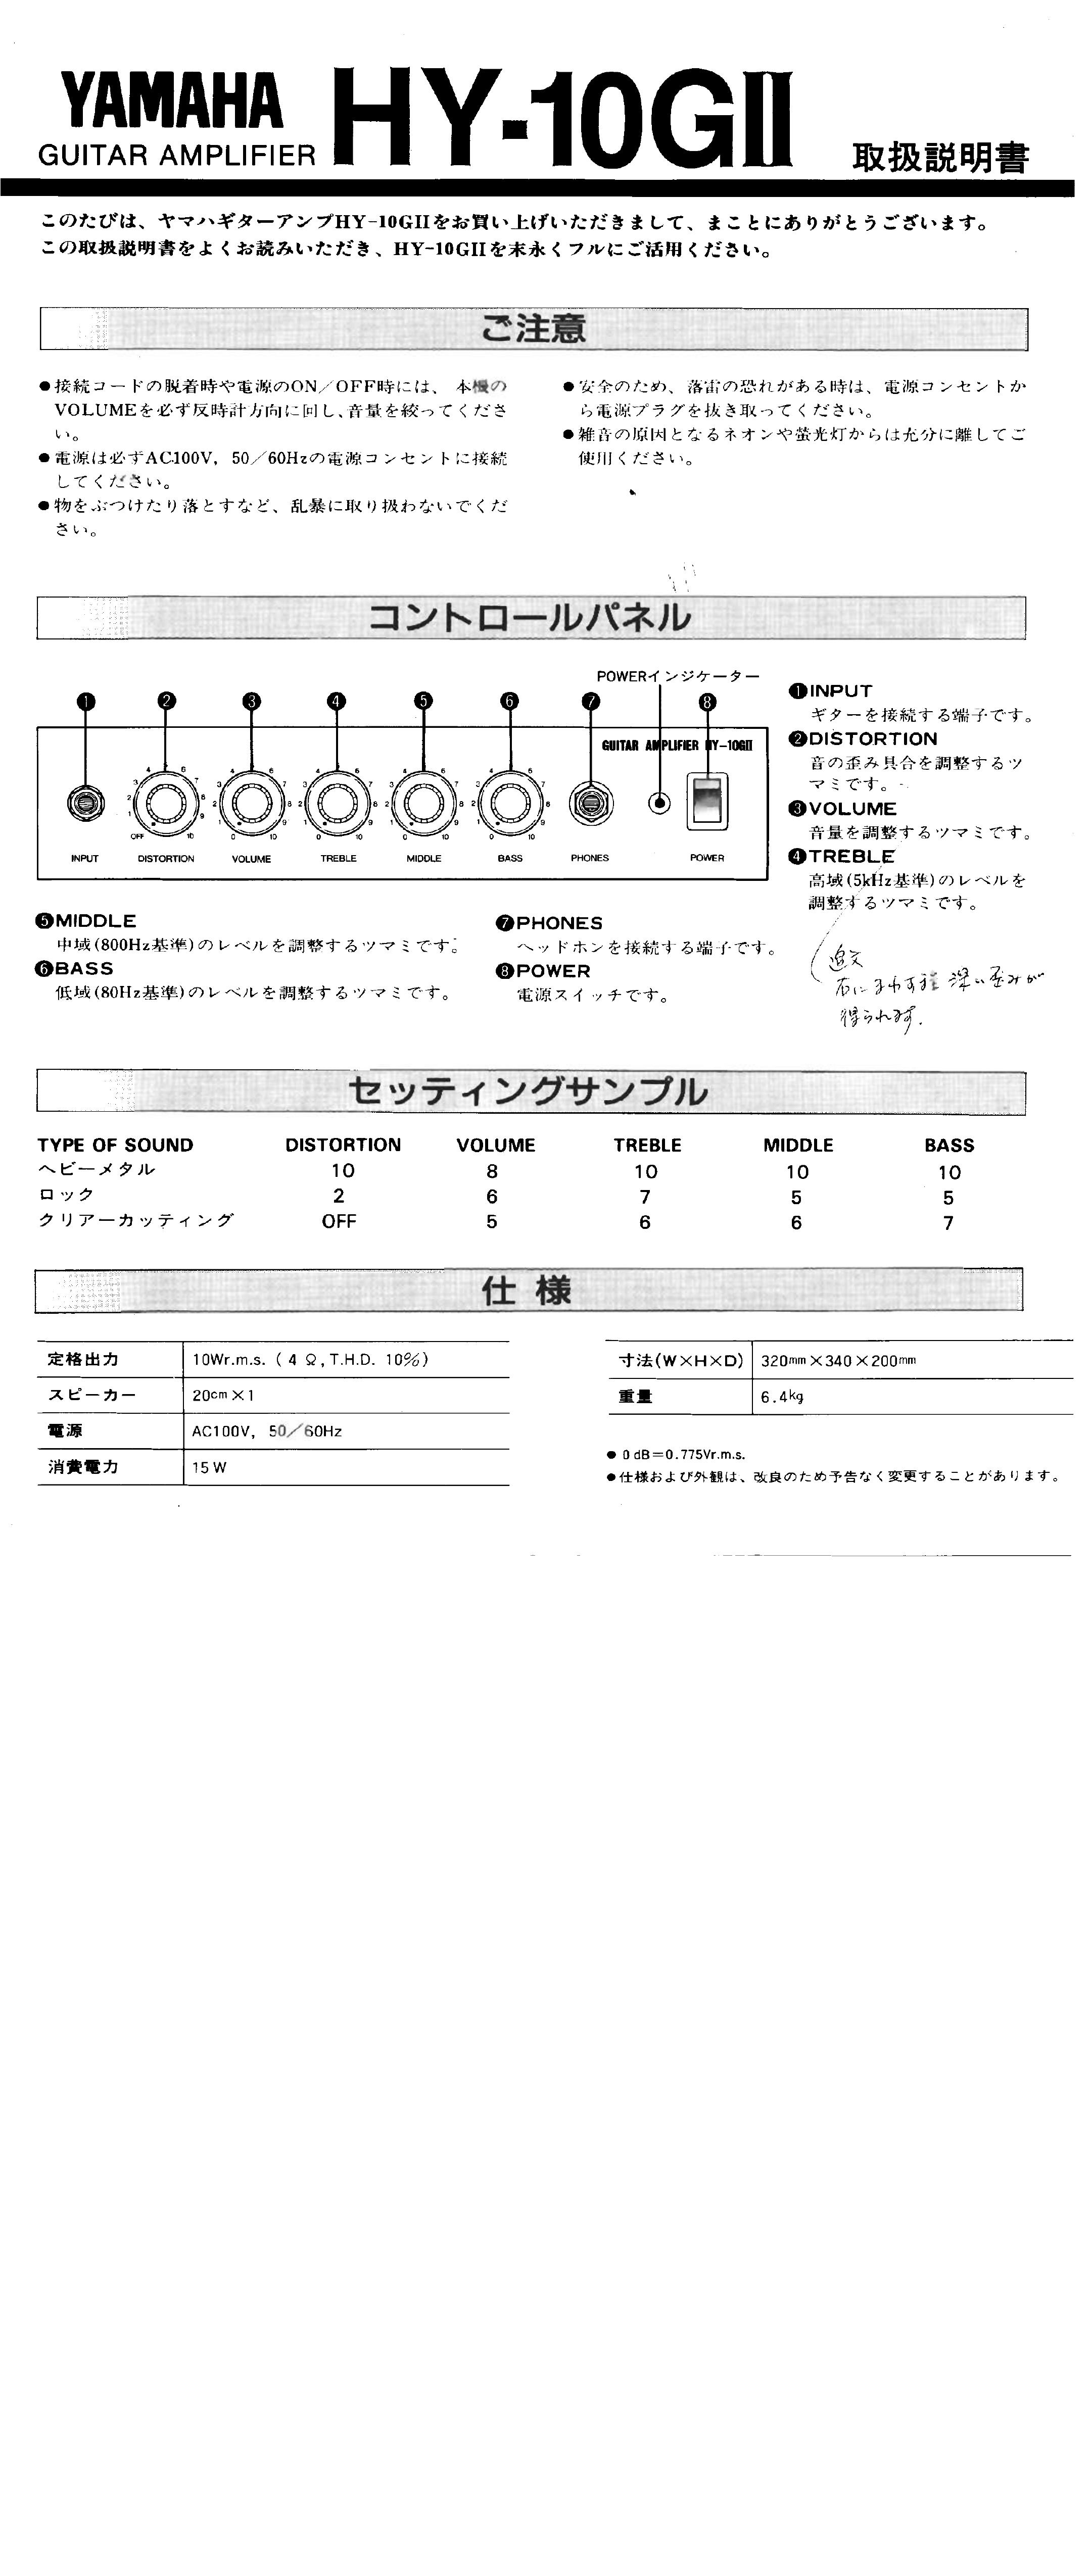 Yamaha HY-10GII Musical Instrument Amplifier User Manual